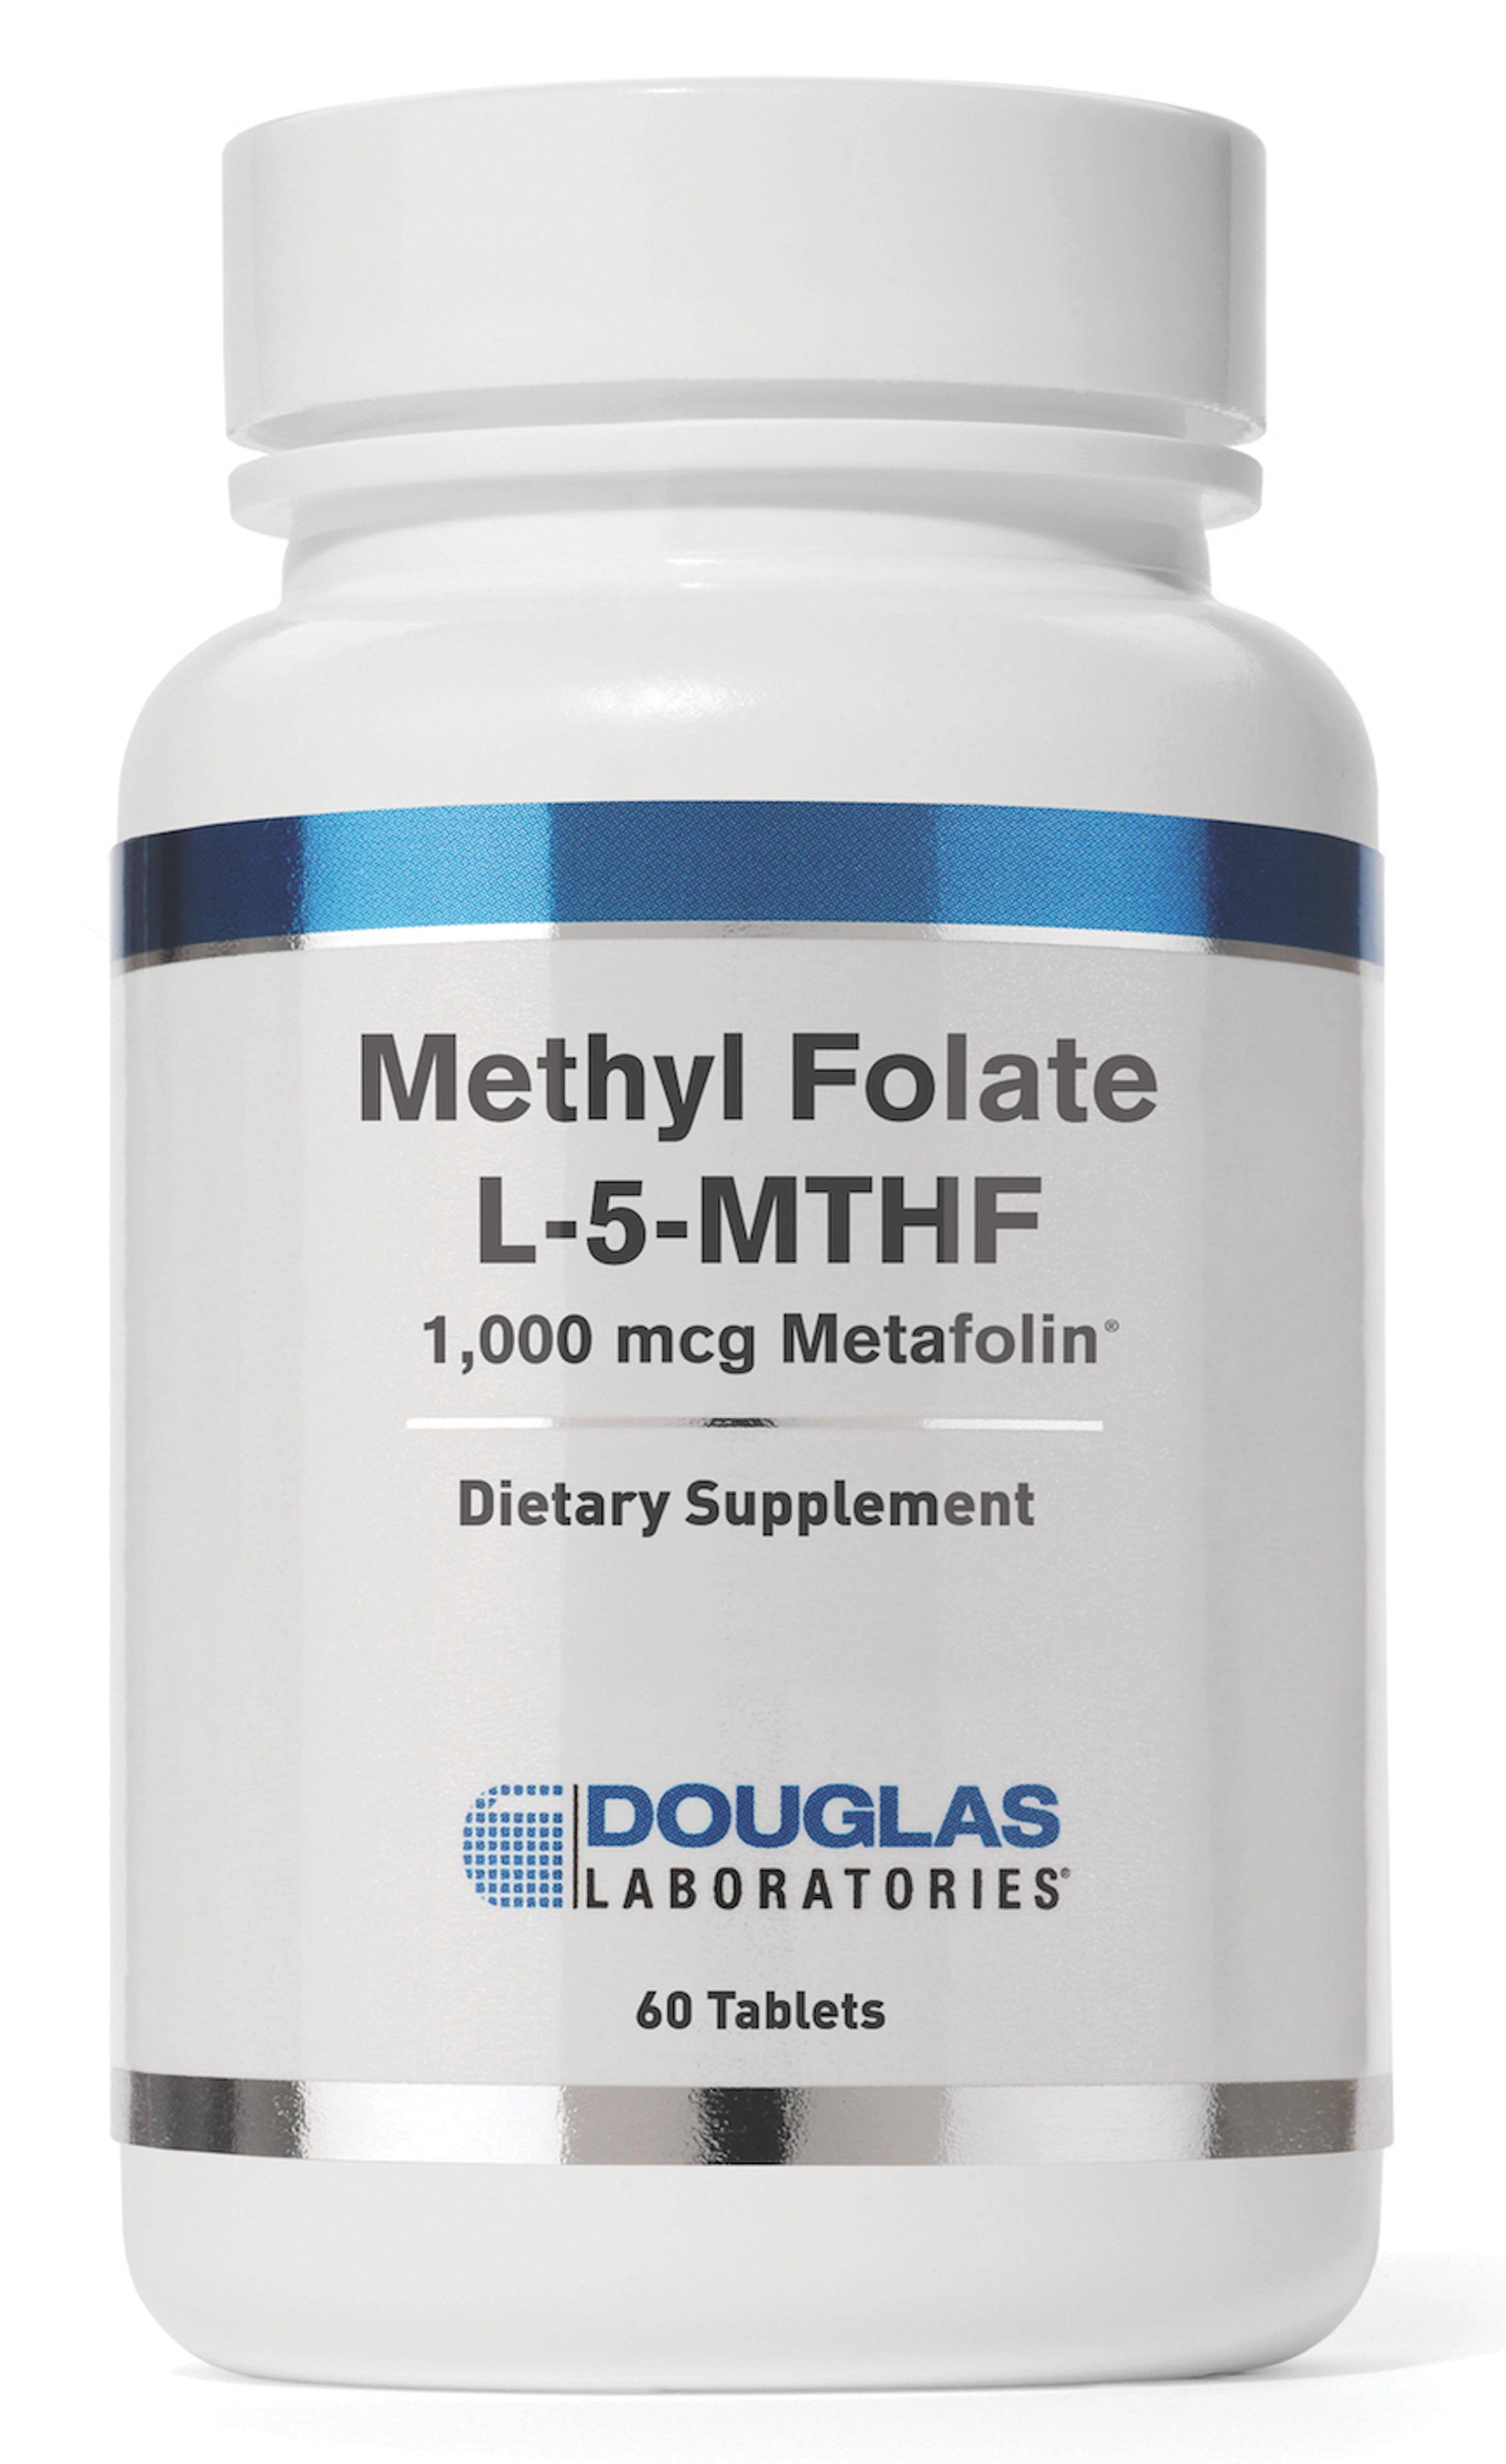 Douglas Laboratories Methyl Folate L-5-Mthf Supplement - 60 Tablets